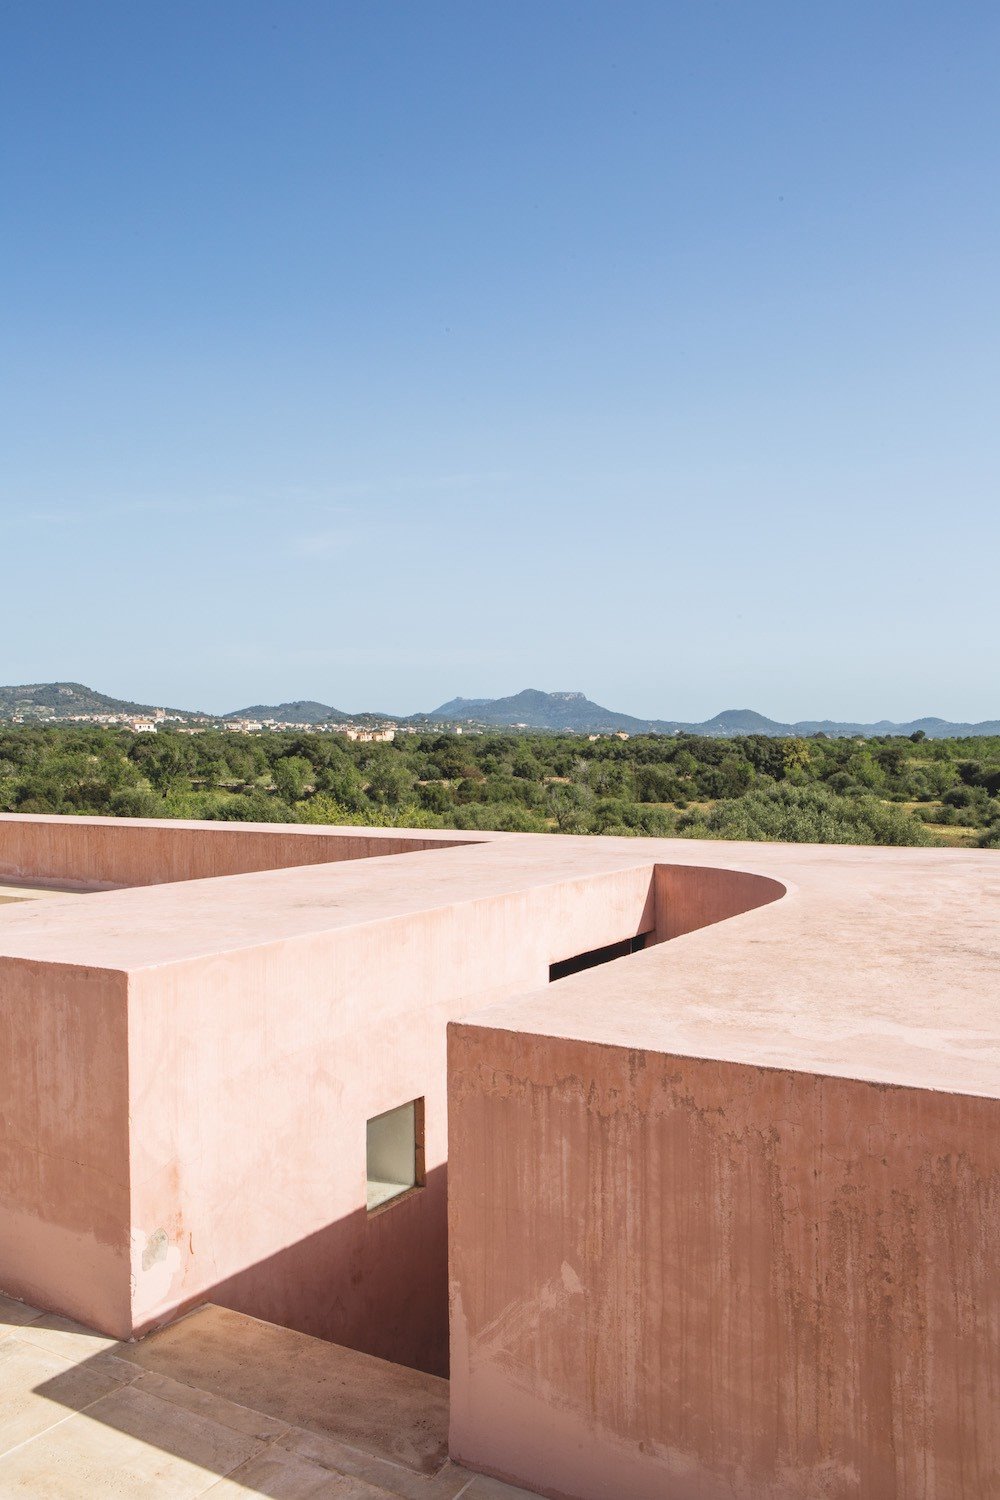 Casa de color rosa de claudio Silvestrin y John pawson en Mallorca